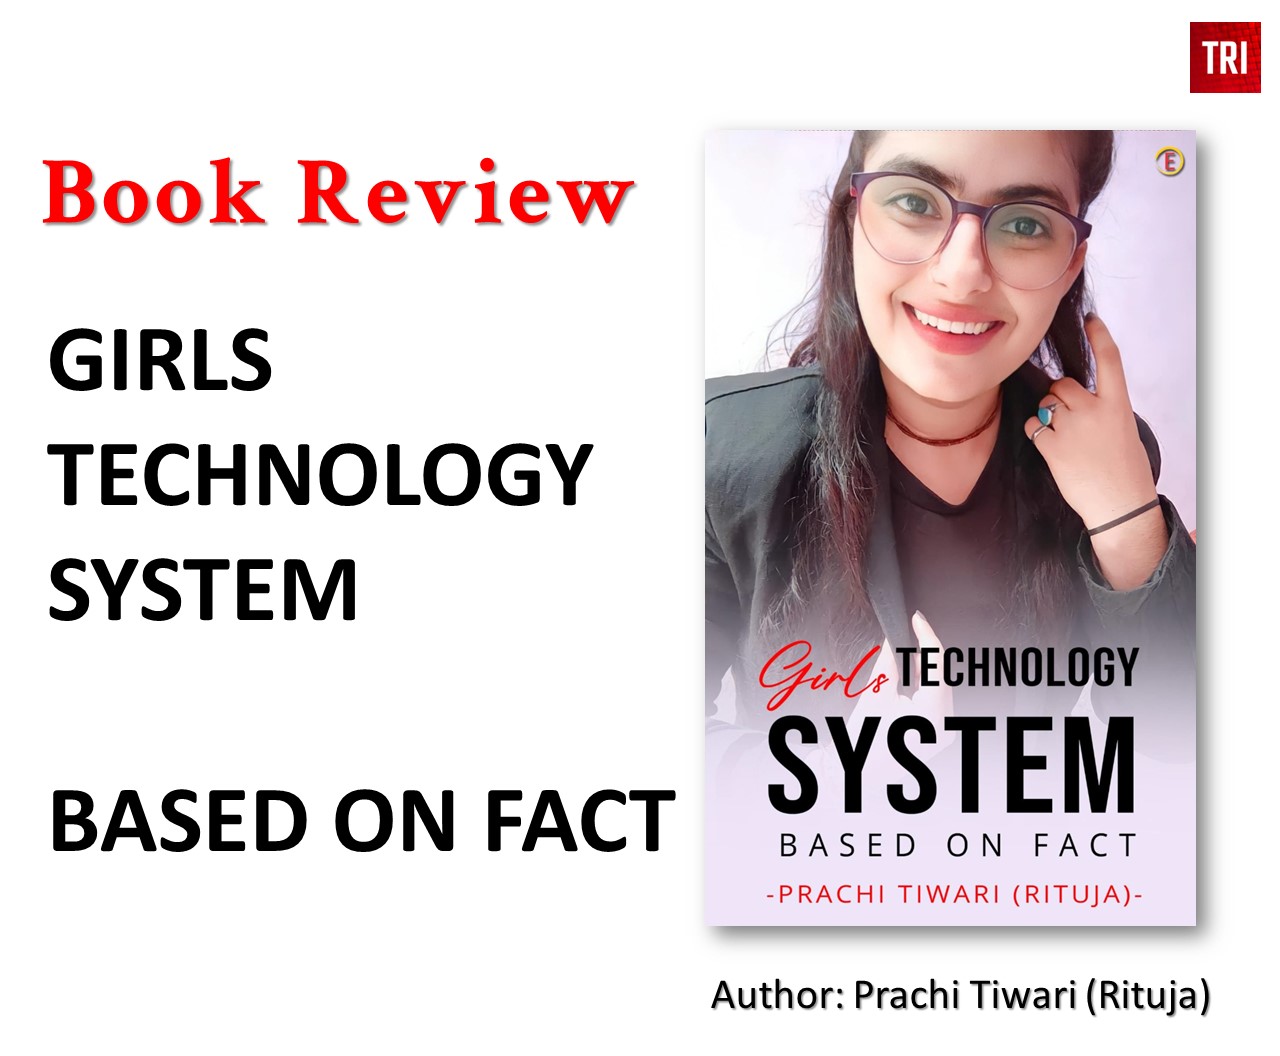 GIRLS TECHNOLOGY SYSTEM